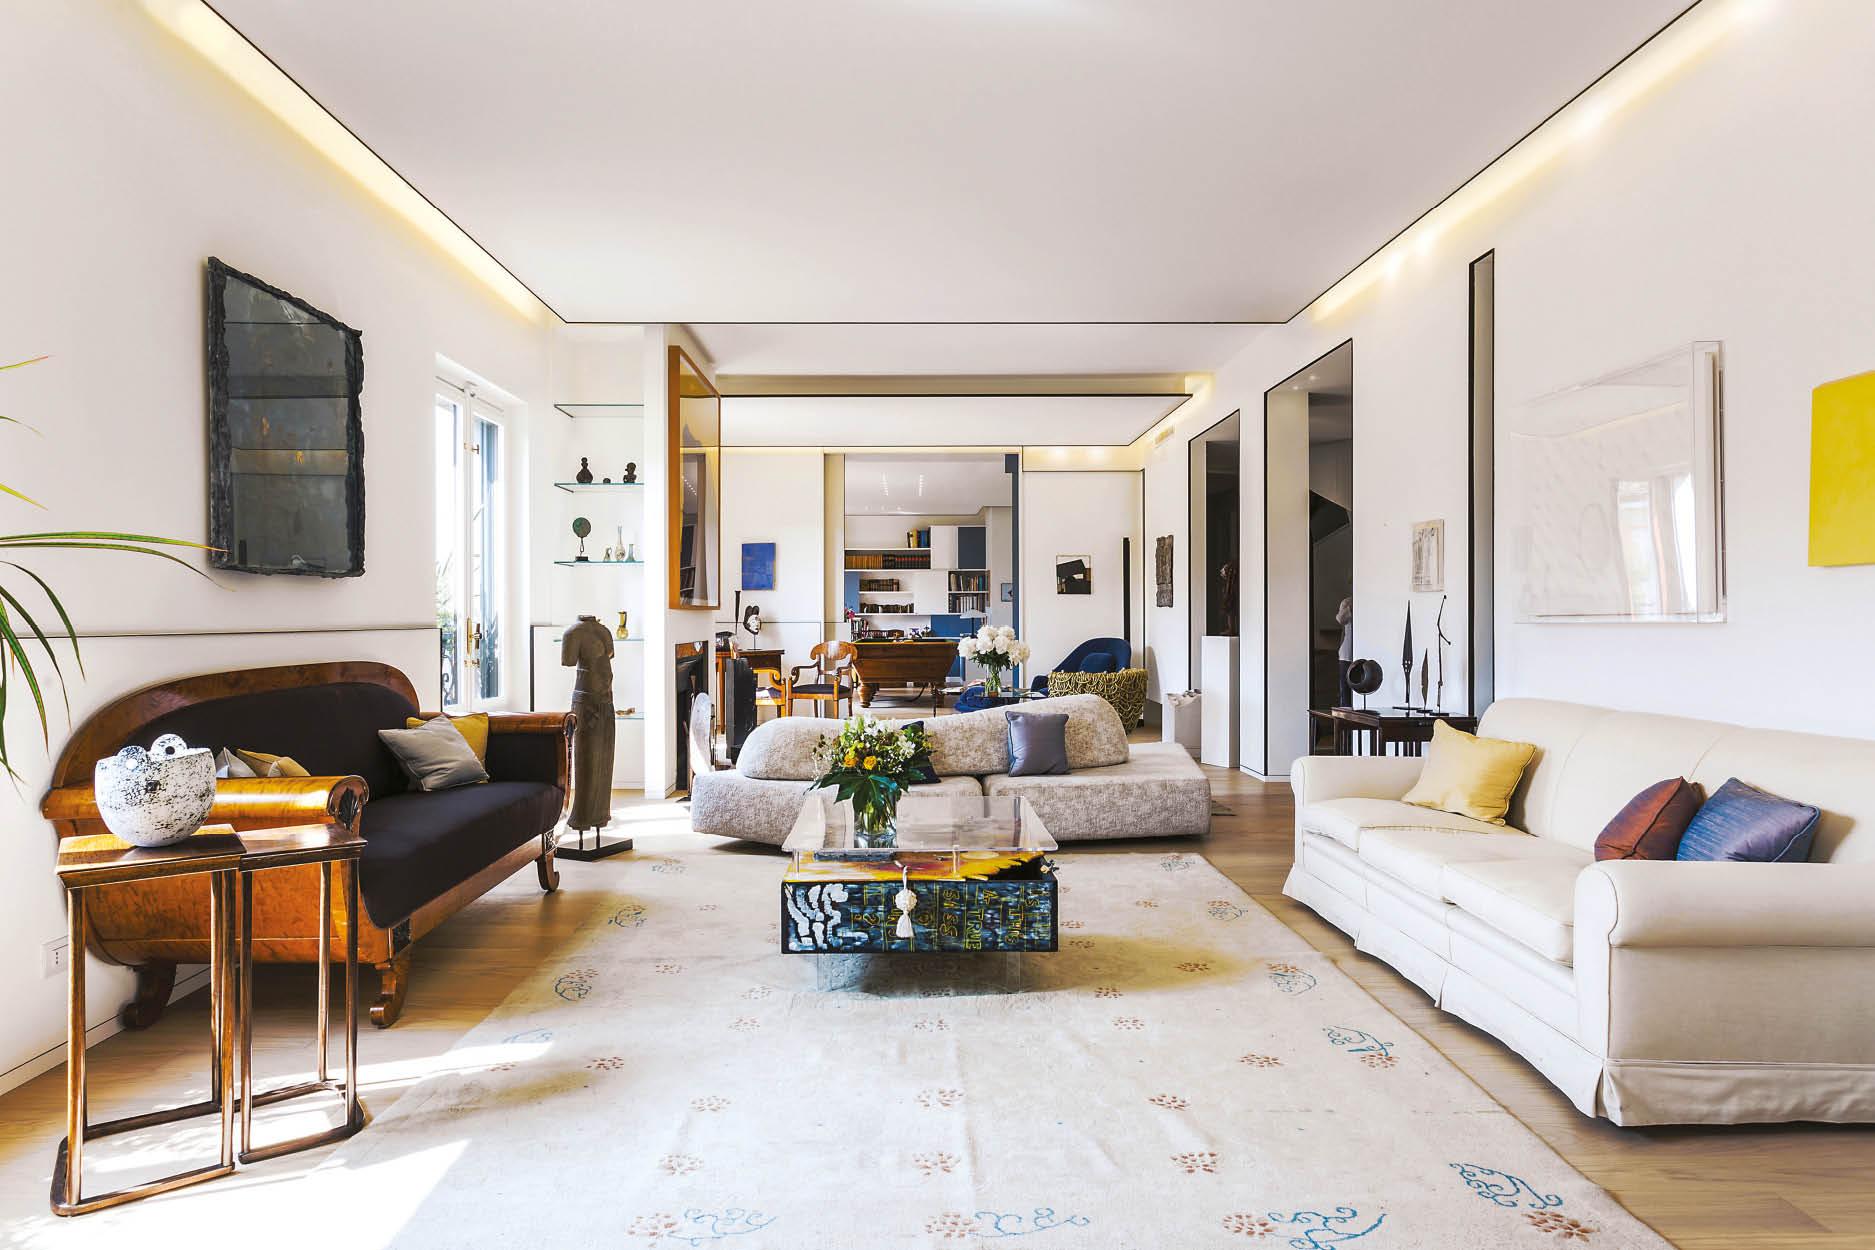 Eclectic Treasures Meet Sleek Contours at this Alluring Abode in Milan